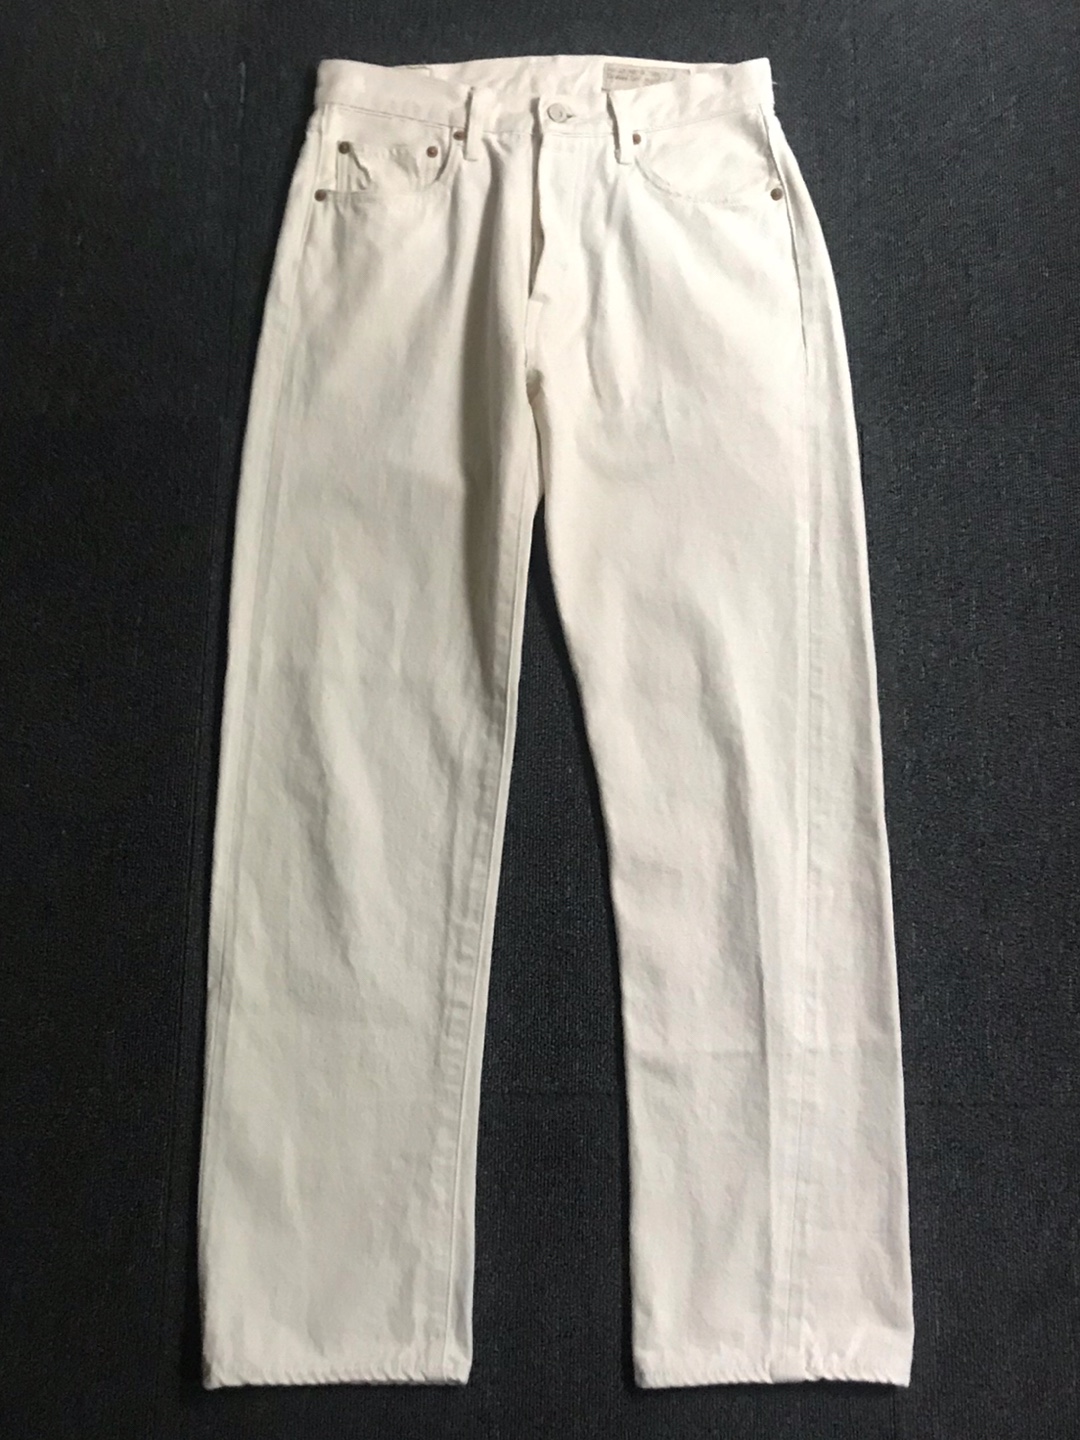 boncoura 66 Off White selvedge jeans (30 size,